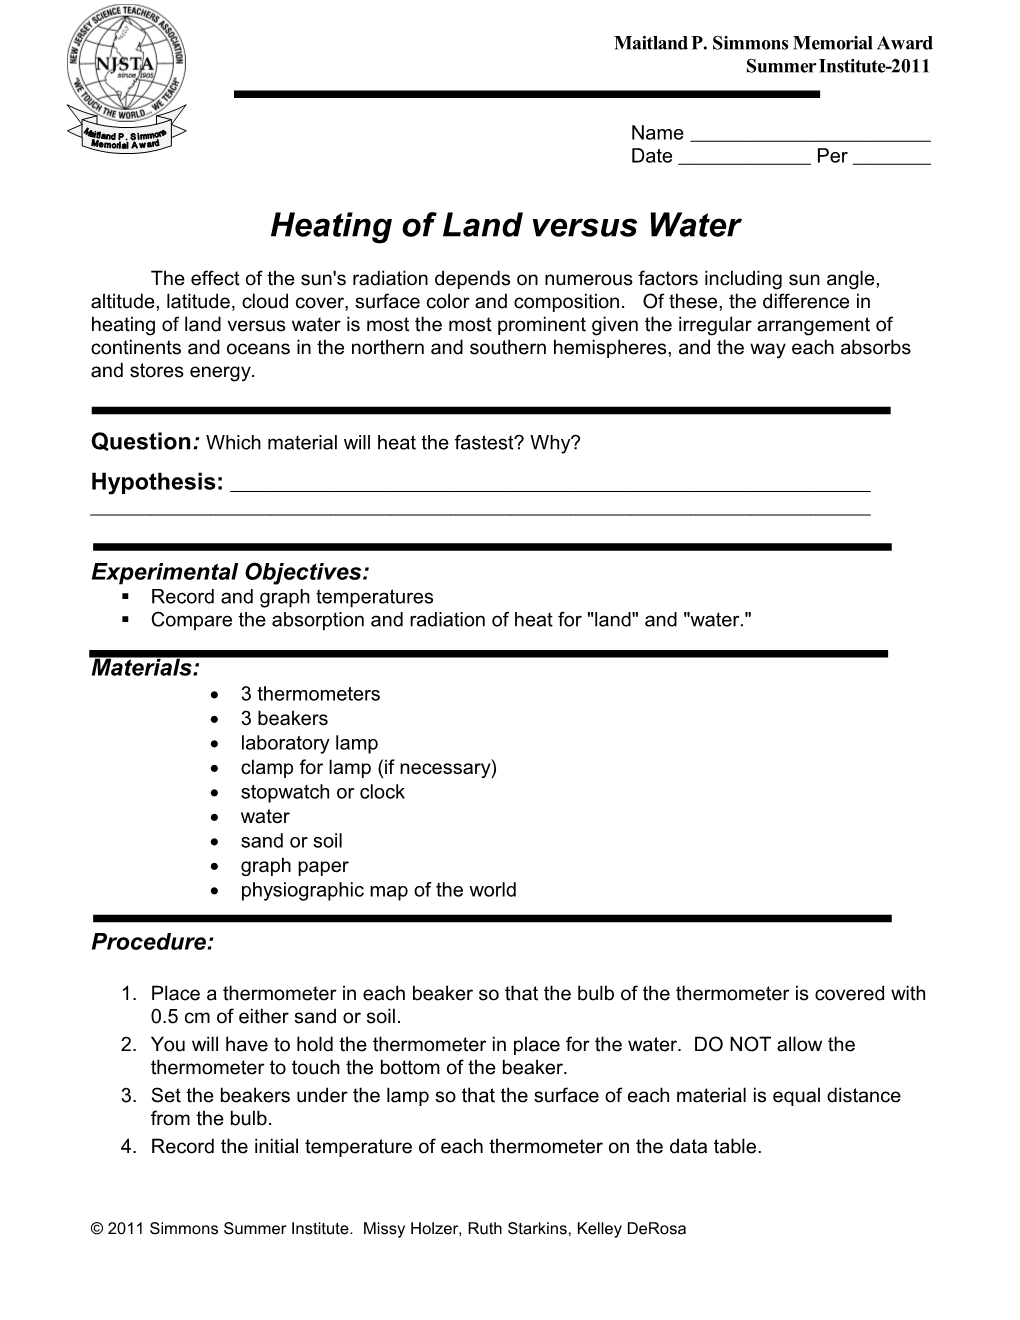 Heating of Land Versus Water